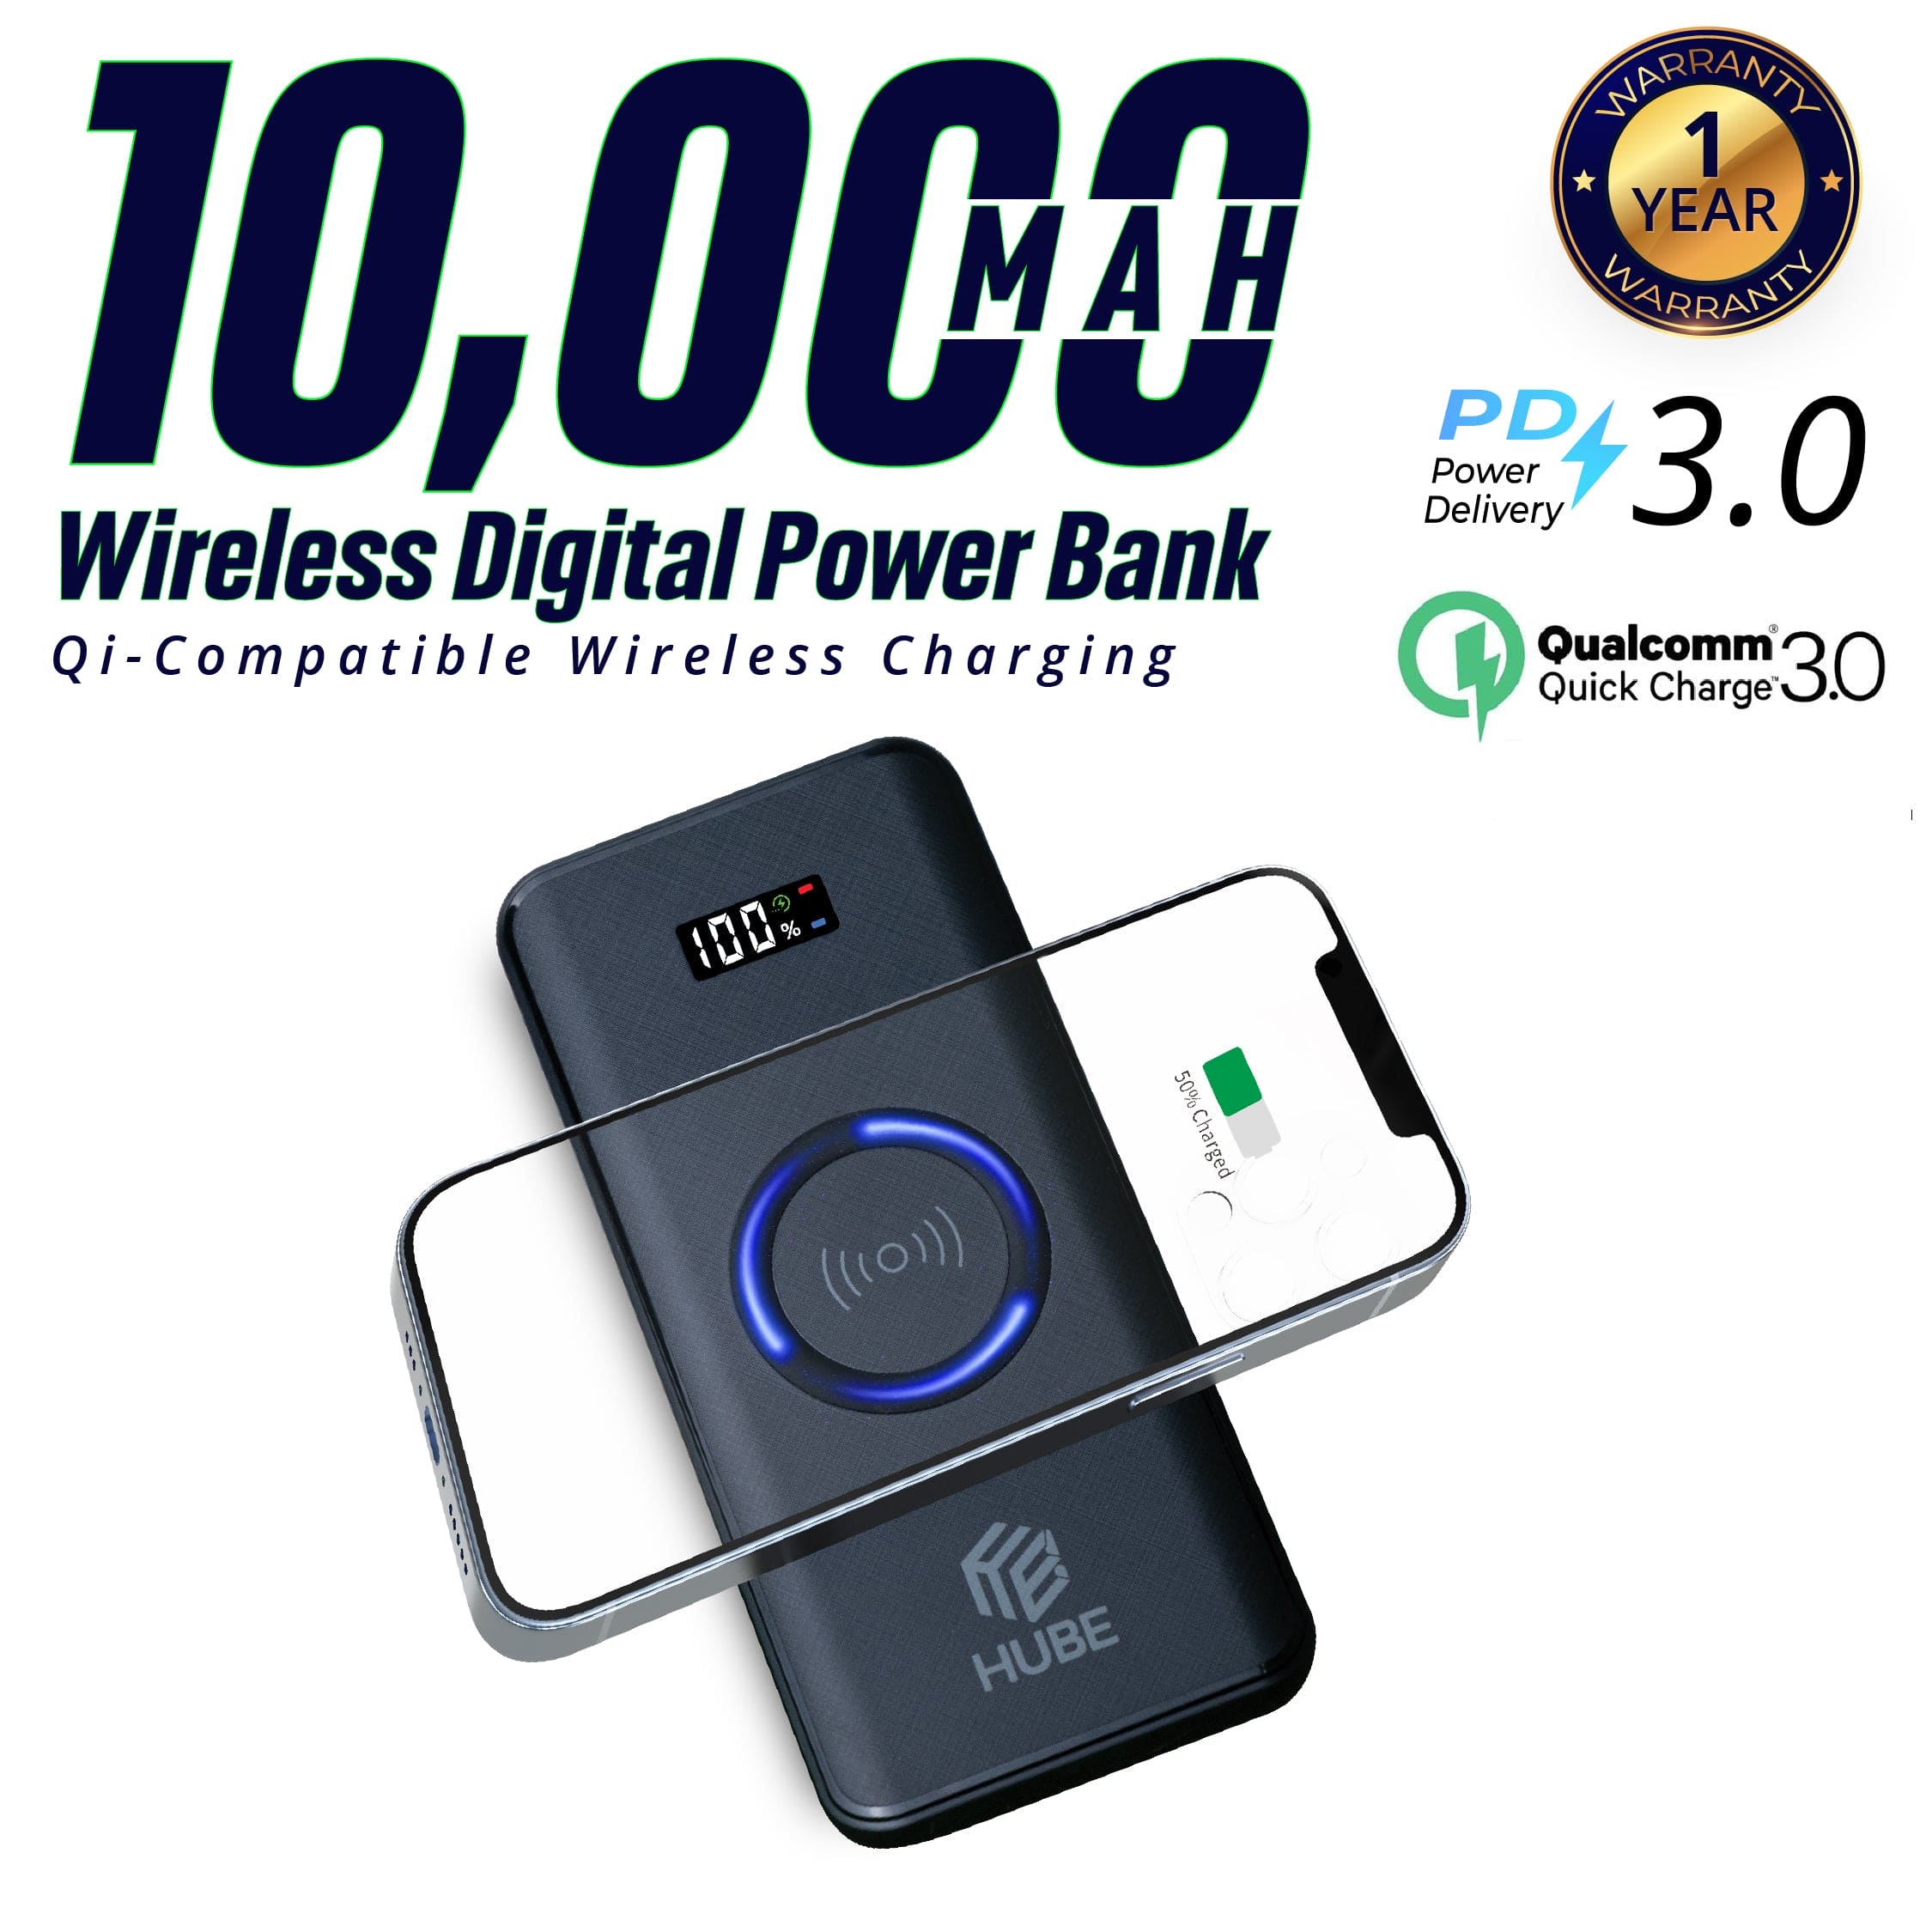 Wireless Charging 10,000 mAh Fast Charging Power Bank – Hube (Pvt